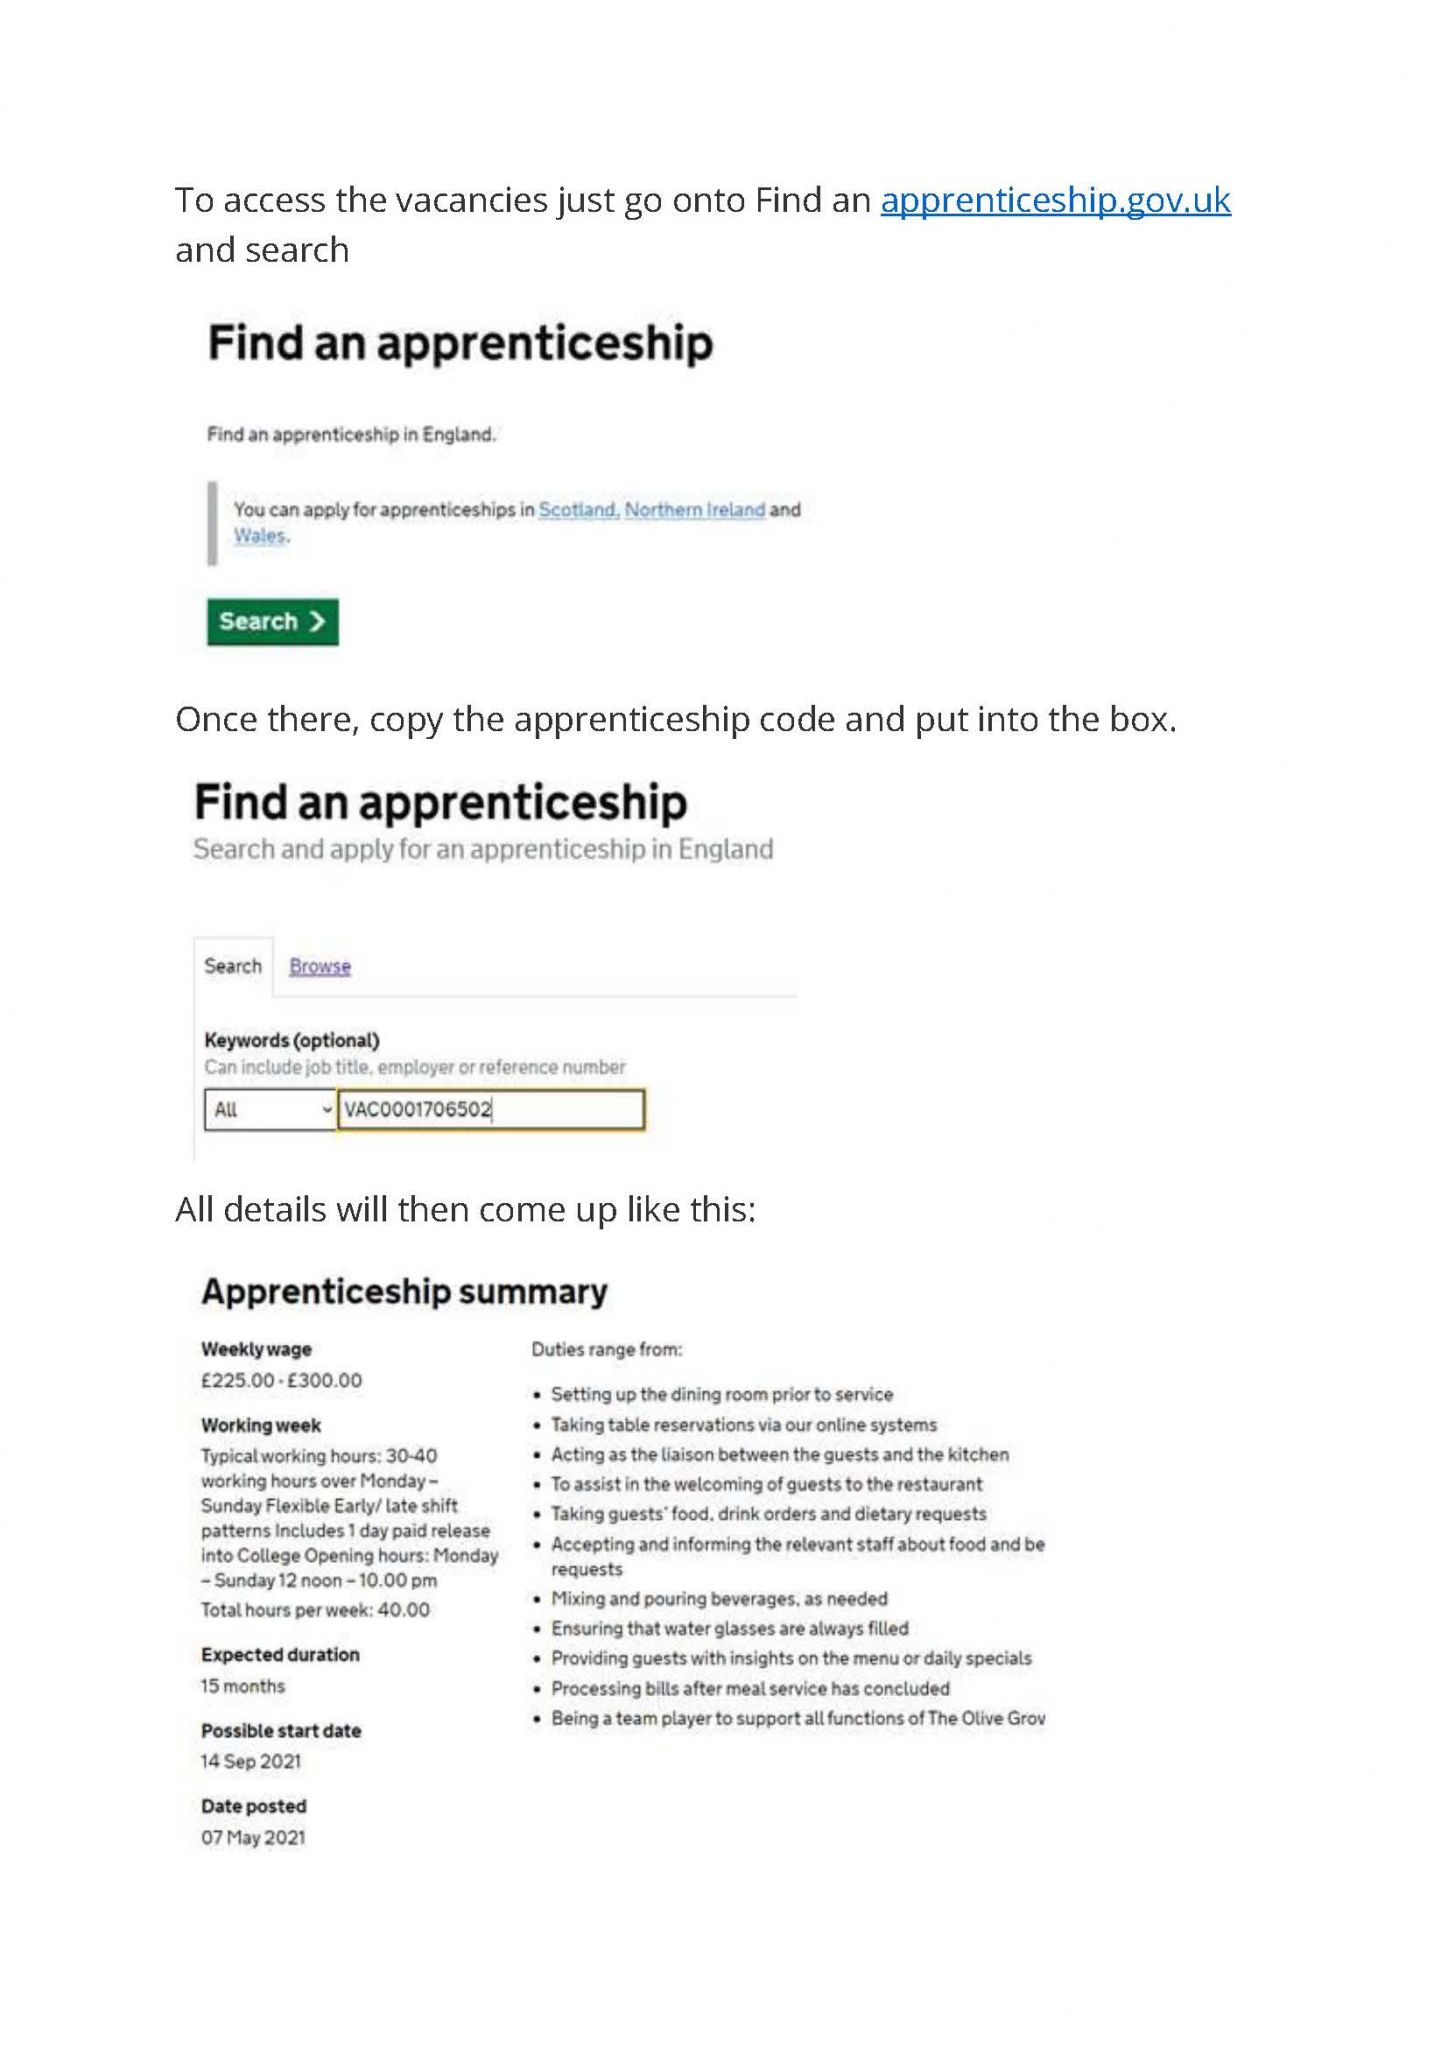 Find an apprenticeship GOV.uk instructions